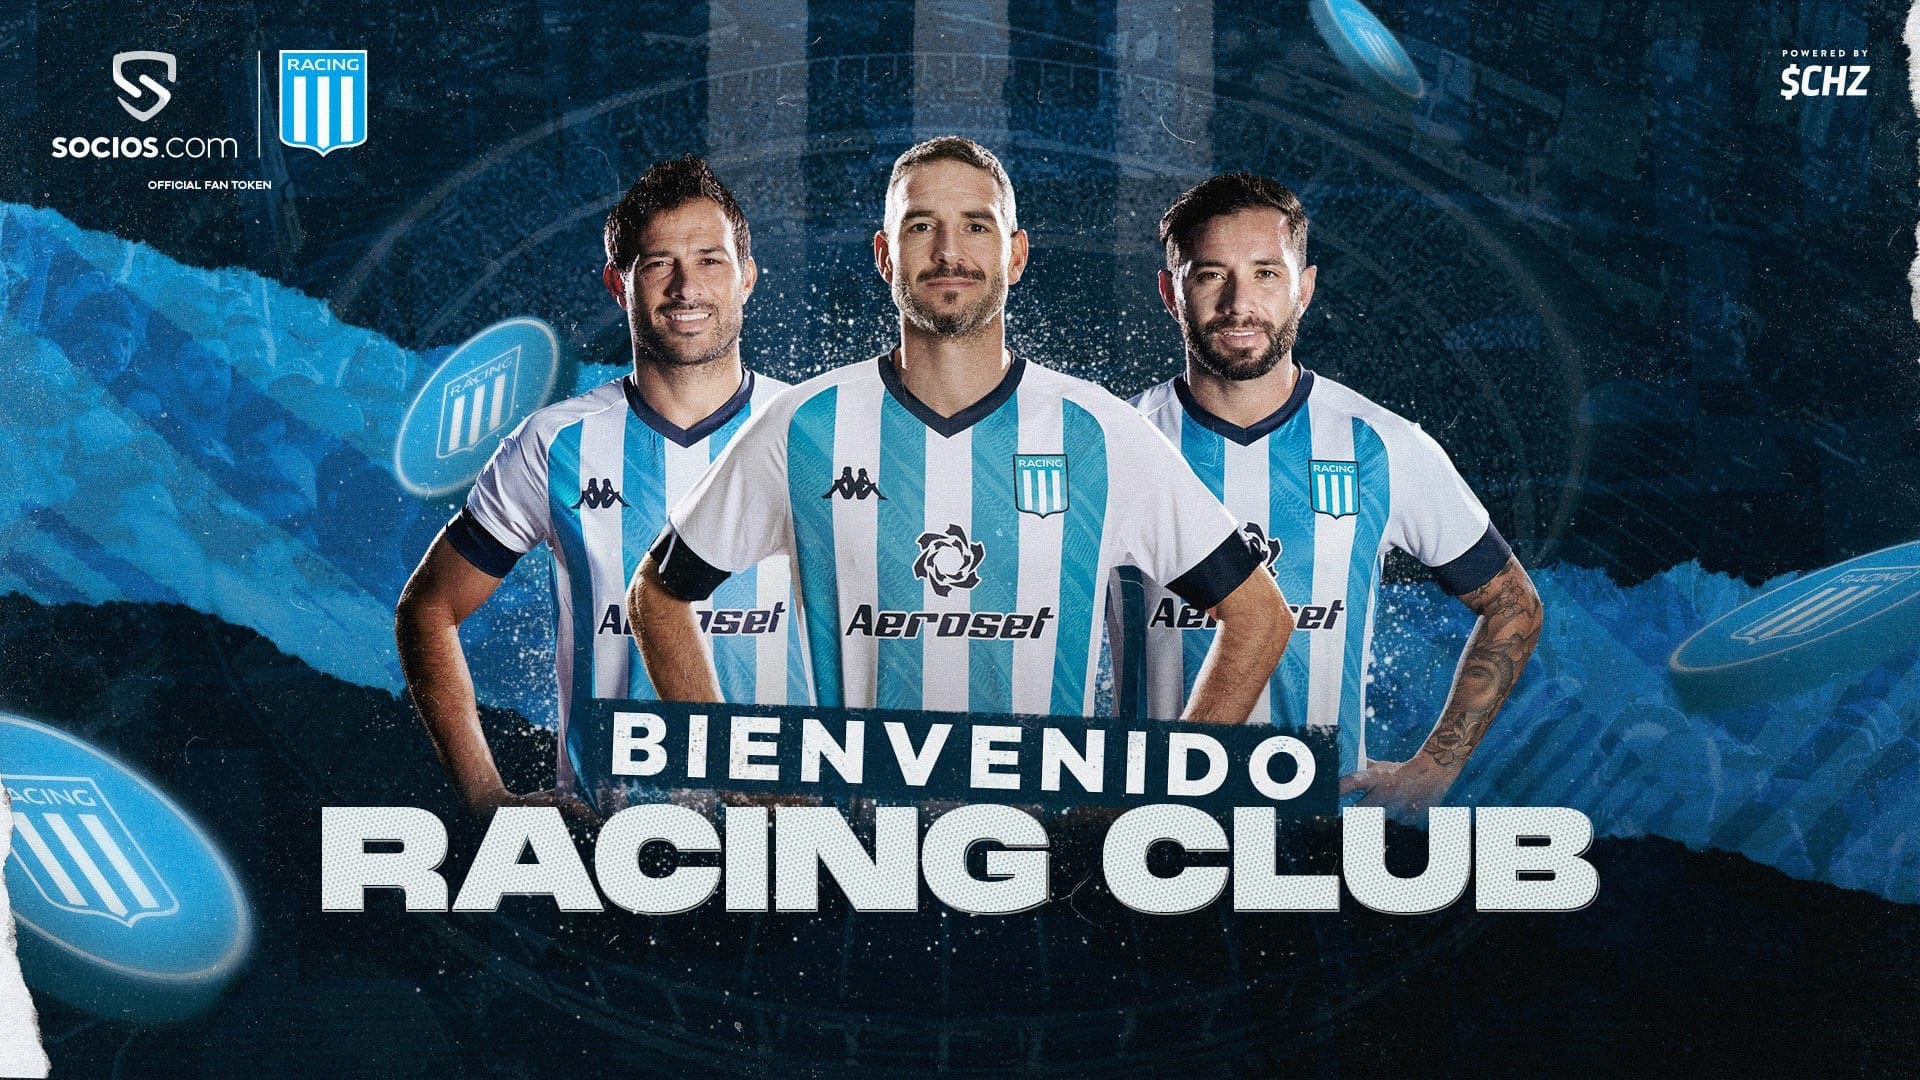 Soccer, football or whatever: Racing Club de Avellaneda Greatest